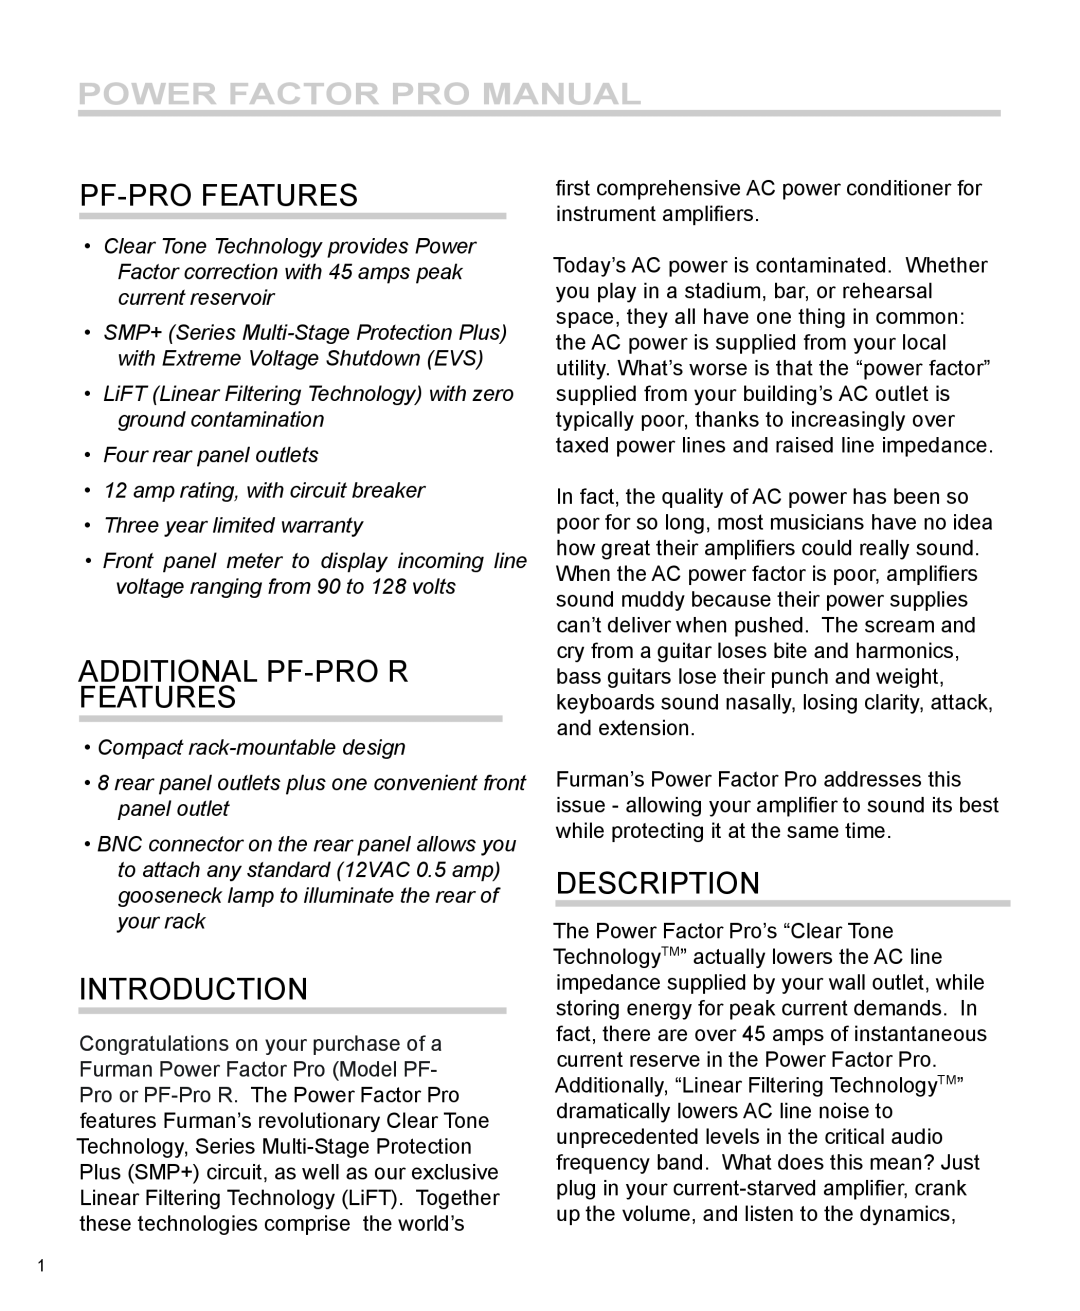 Furman Sound PF-Pro R Power Factor pro manual, Pf-pro Features, additional Pf-pro r Features, Introduction, Description 